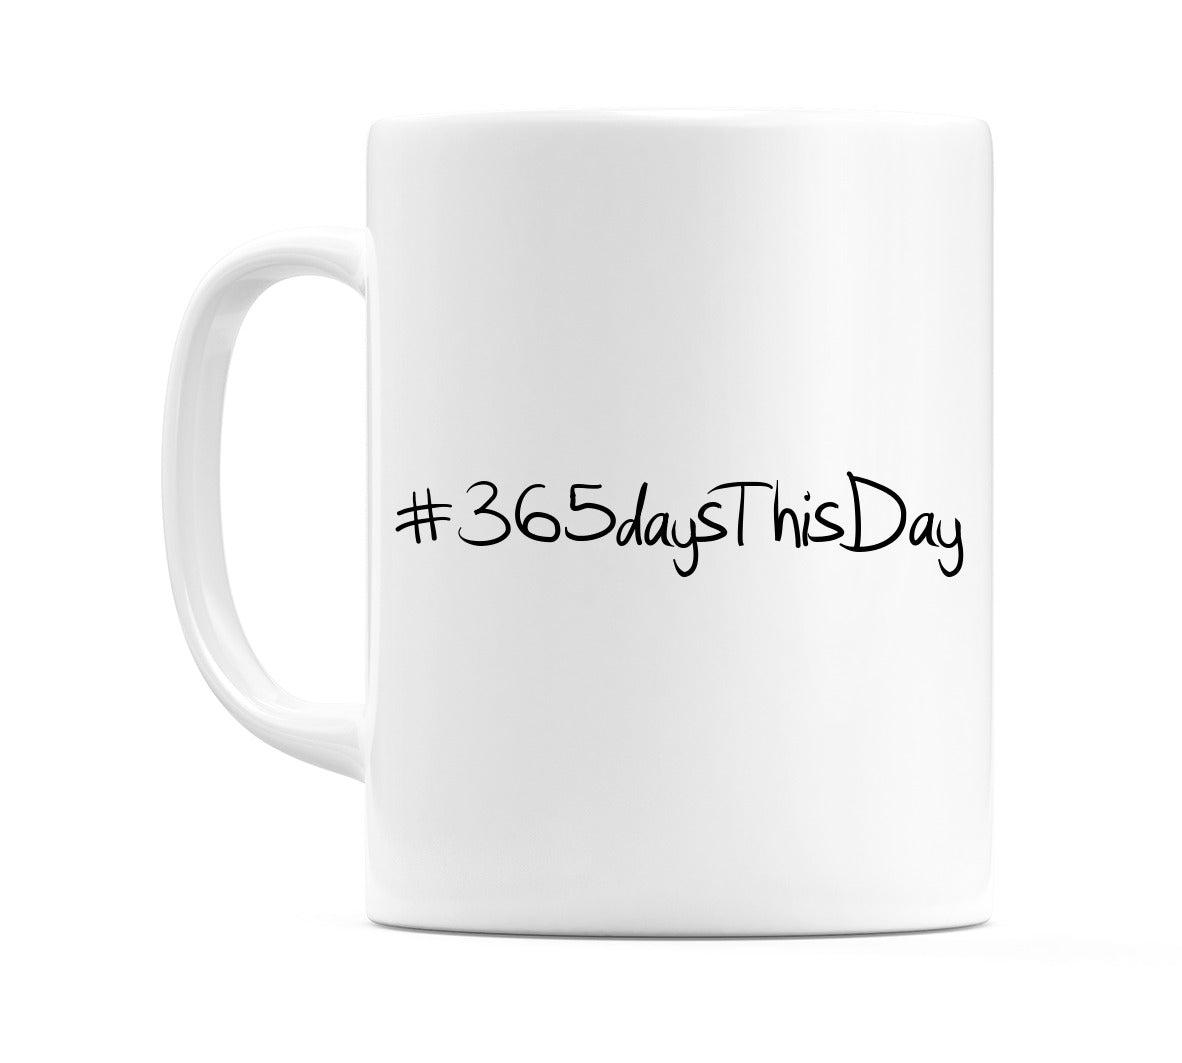 #365daysThisDay Mug